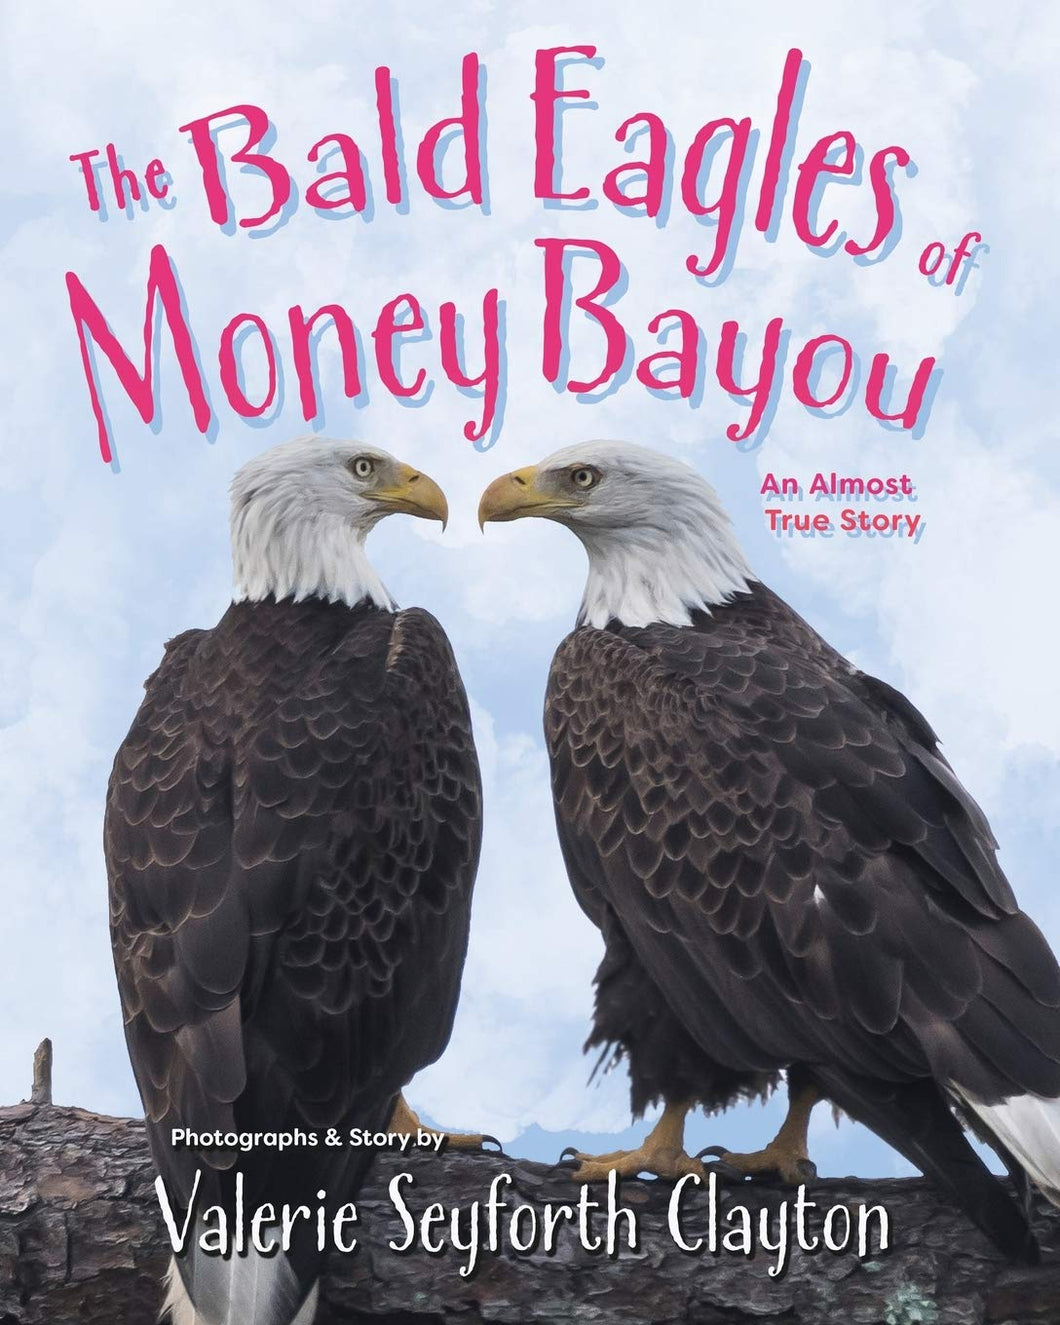 Bald Eagles of Money Bayou